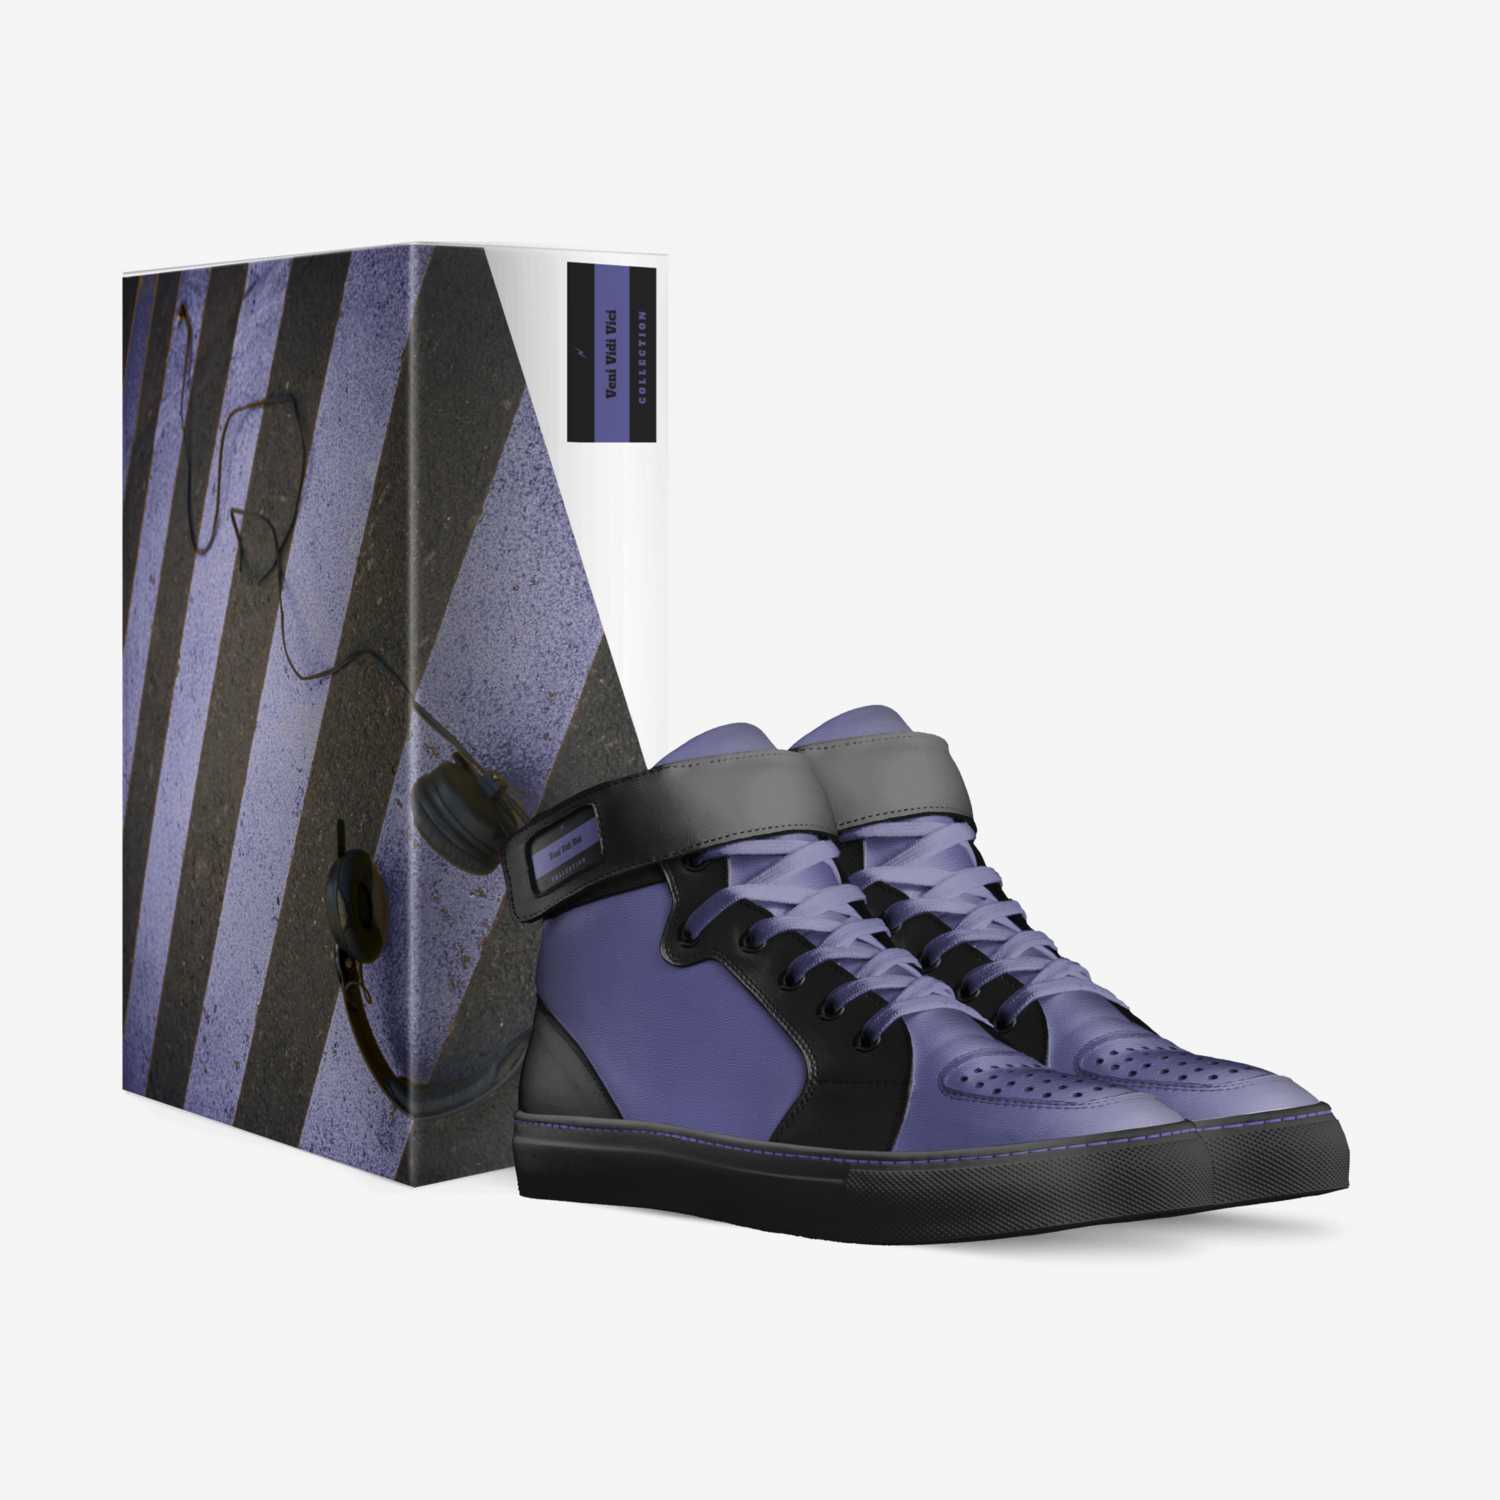 Veni custom made in Italy shoes by Antonio Camarena | Box view